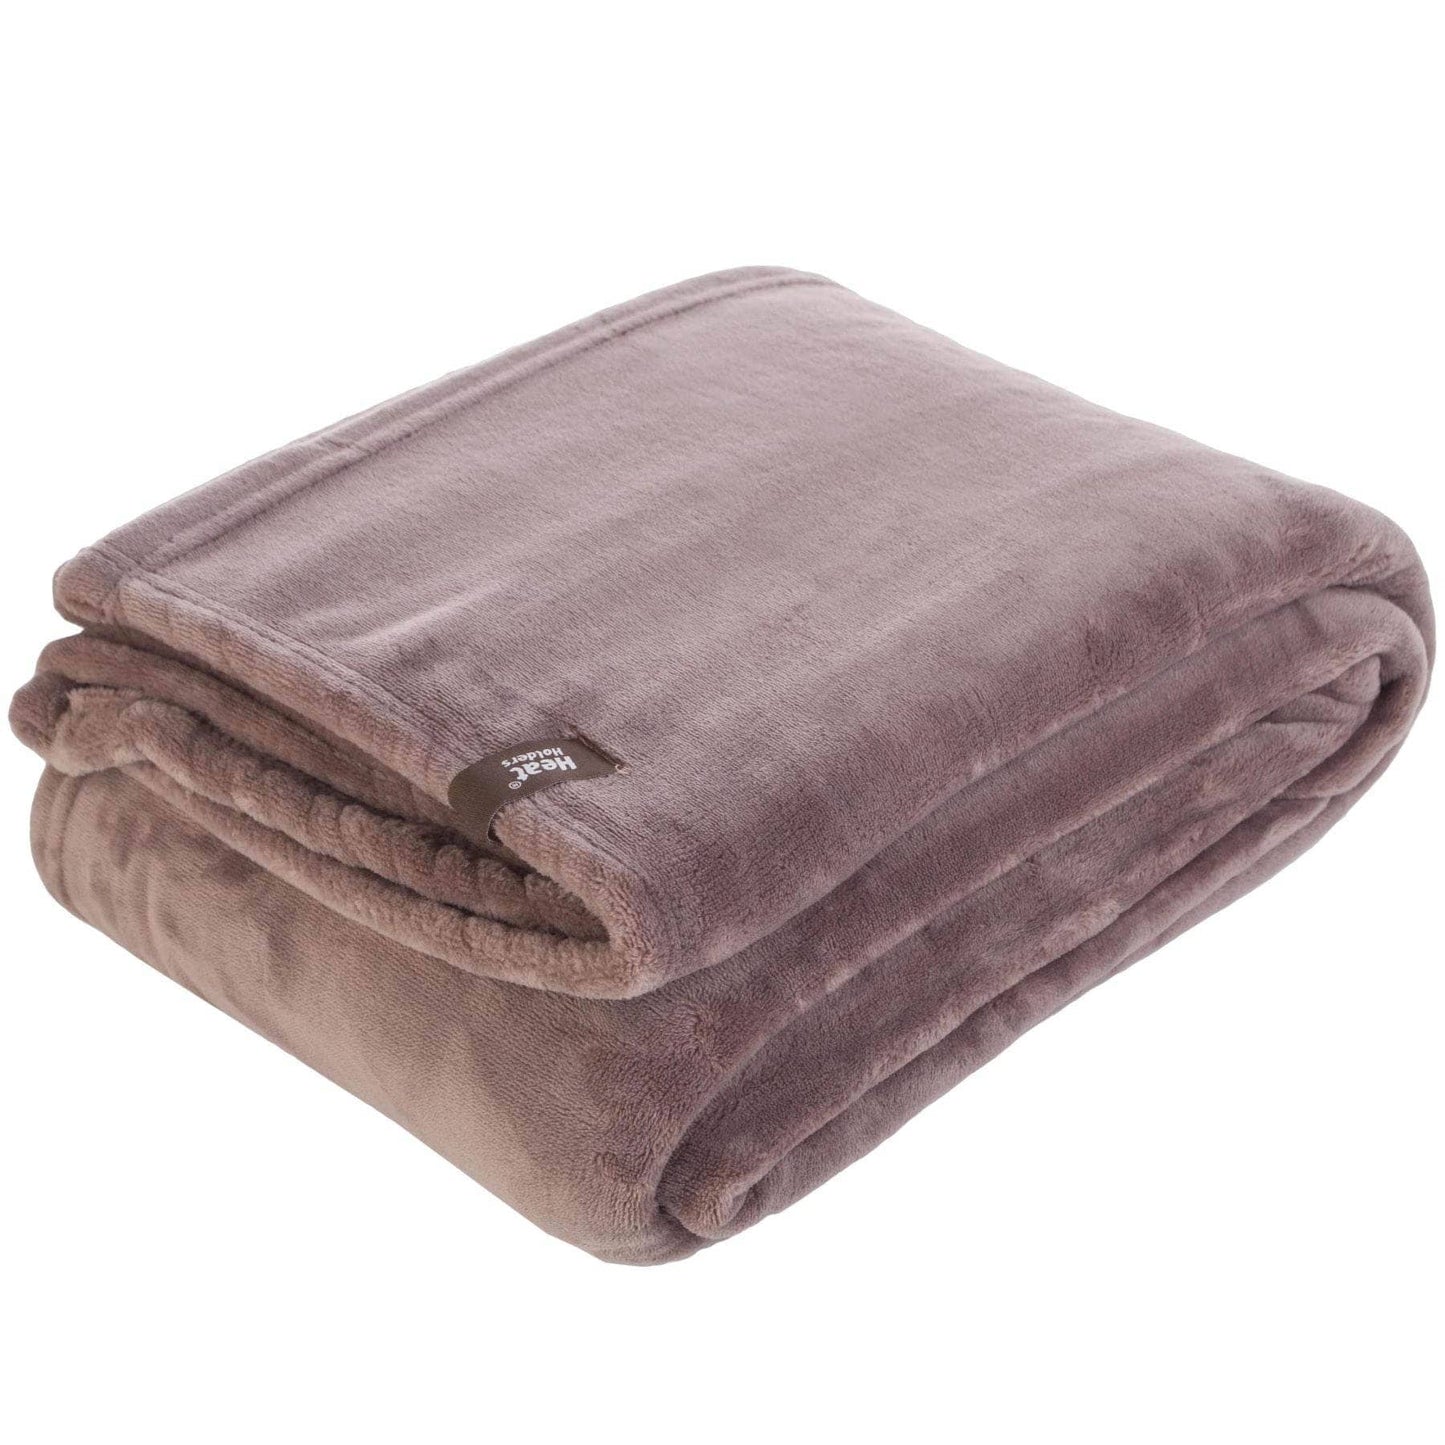 Homeware  -  Heat Holder Blanket - Winter Fawn  -  60009939